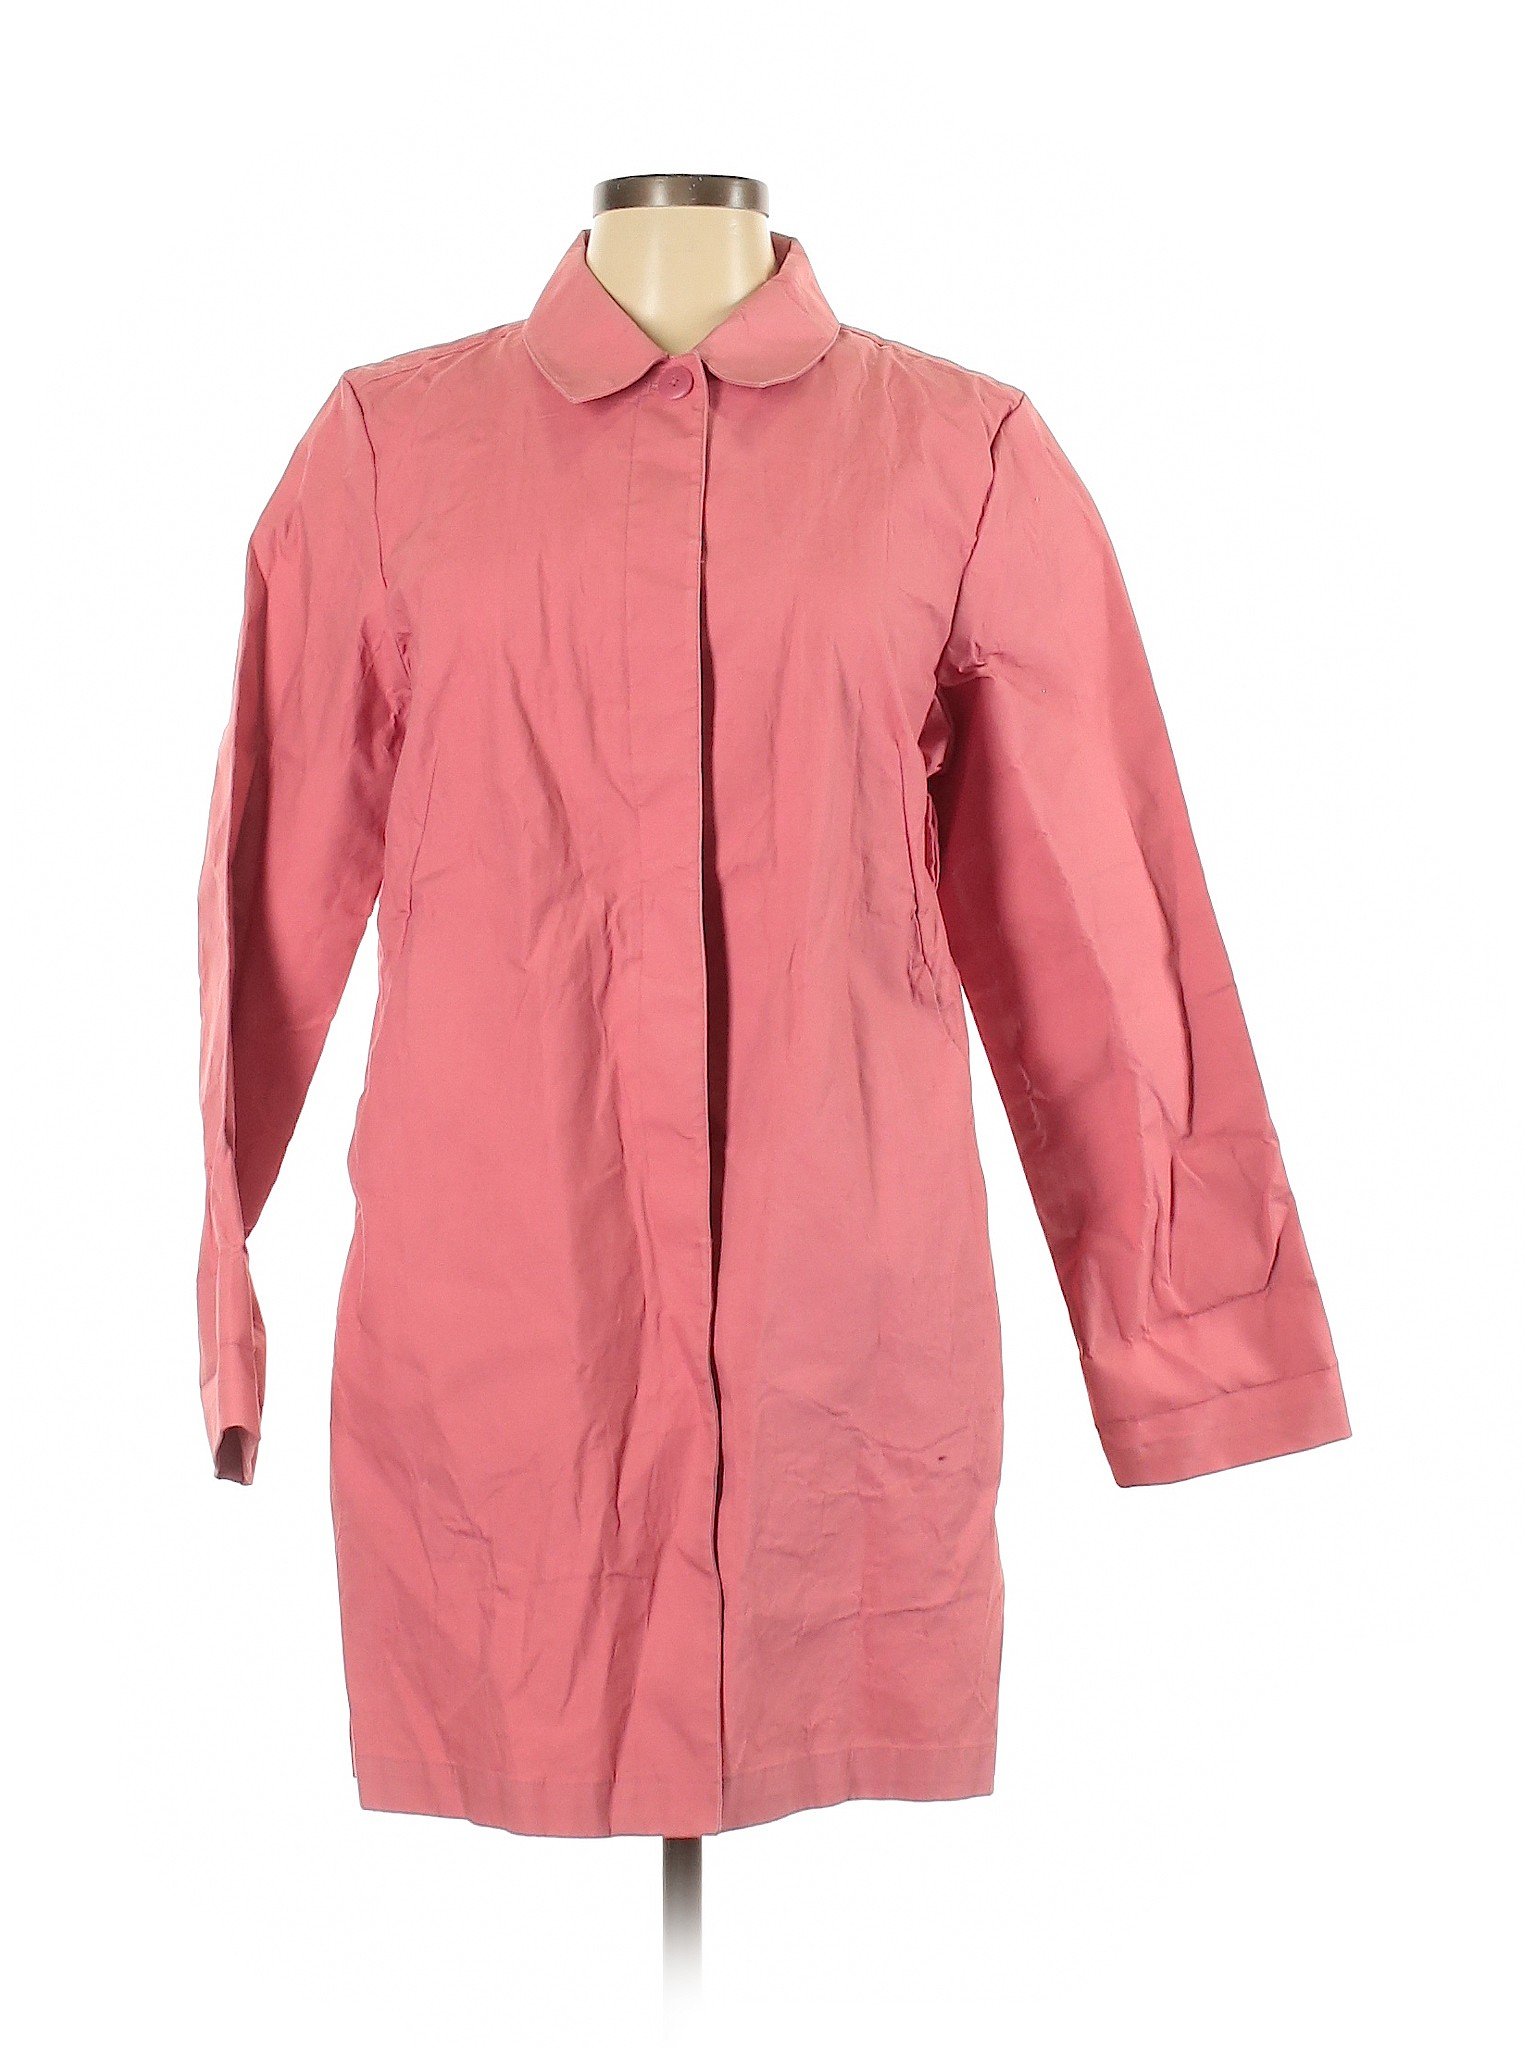 Bass Women Pink Trenchcoat L | eBay